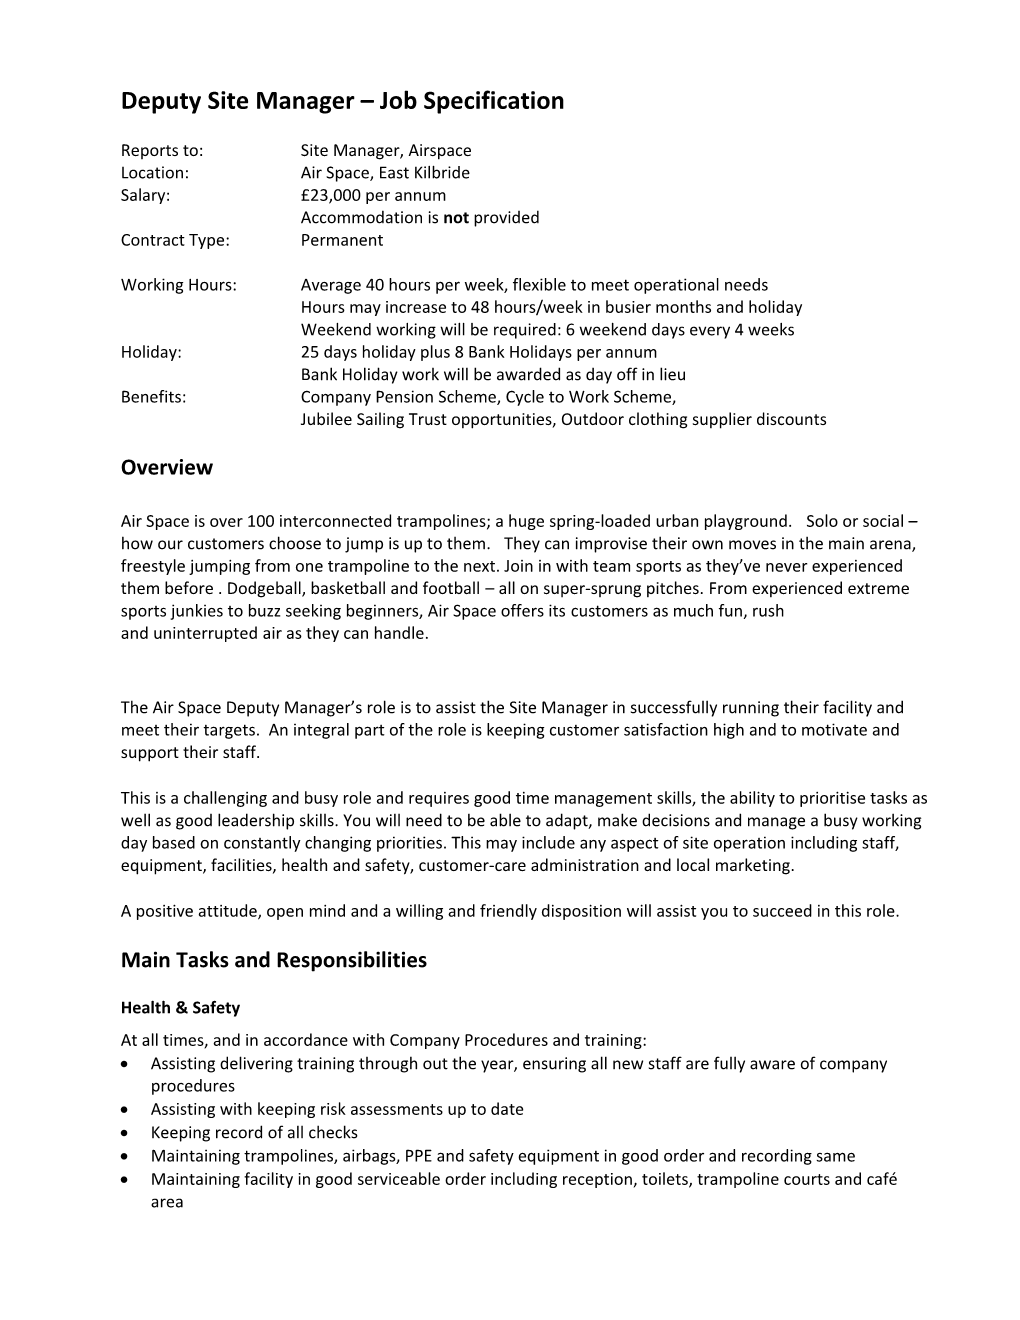 Job Description for HR Manager As at June 2007